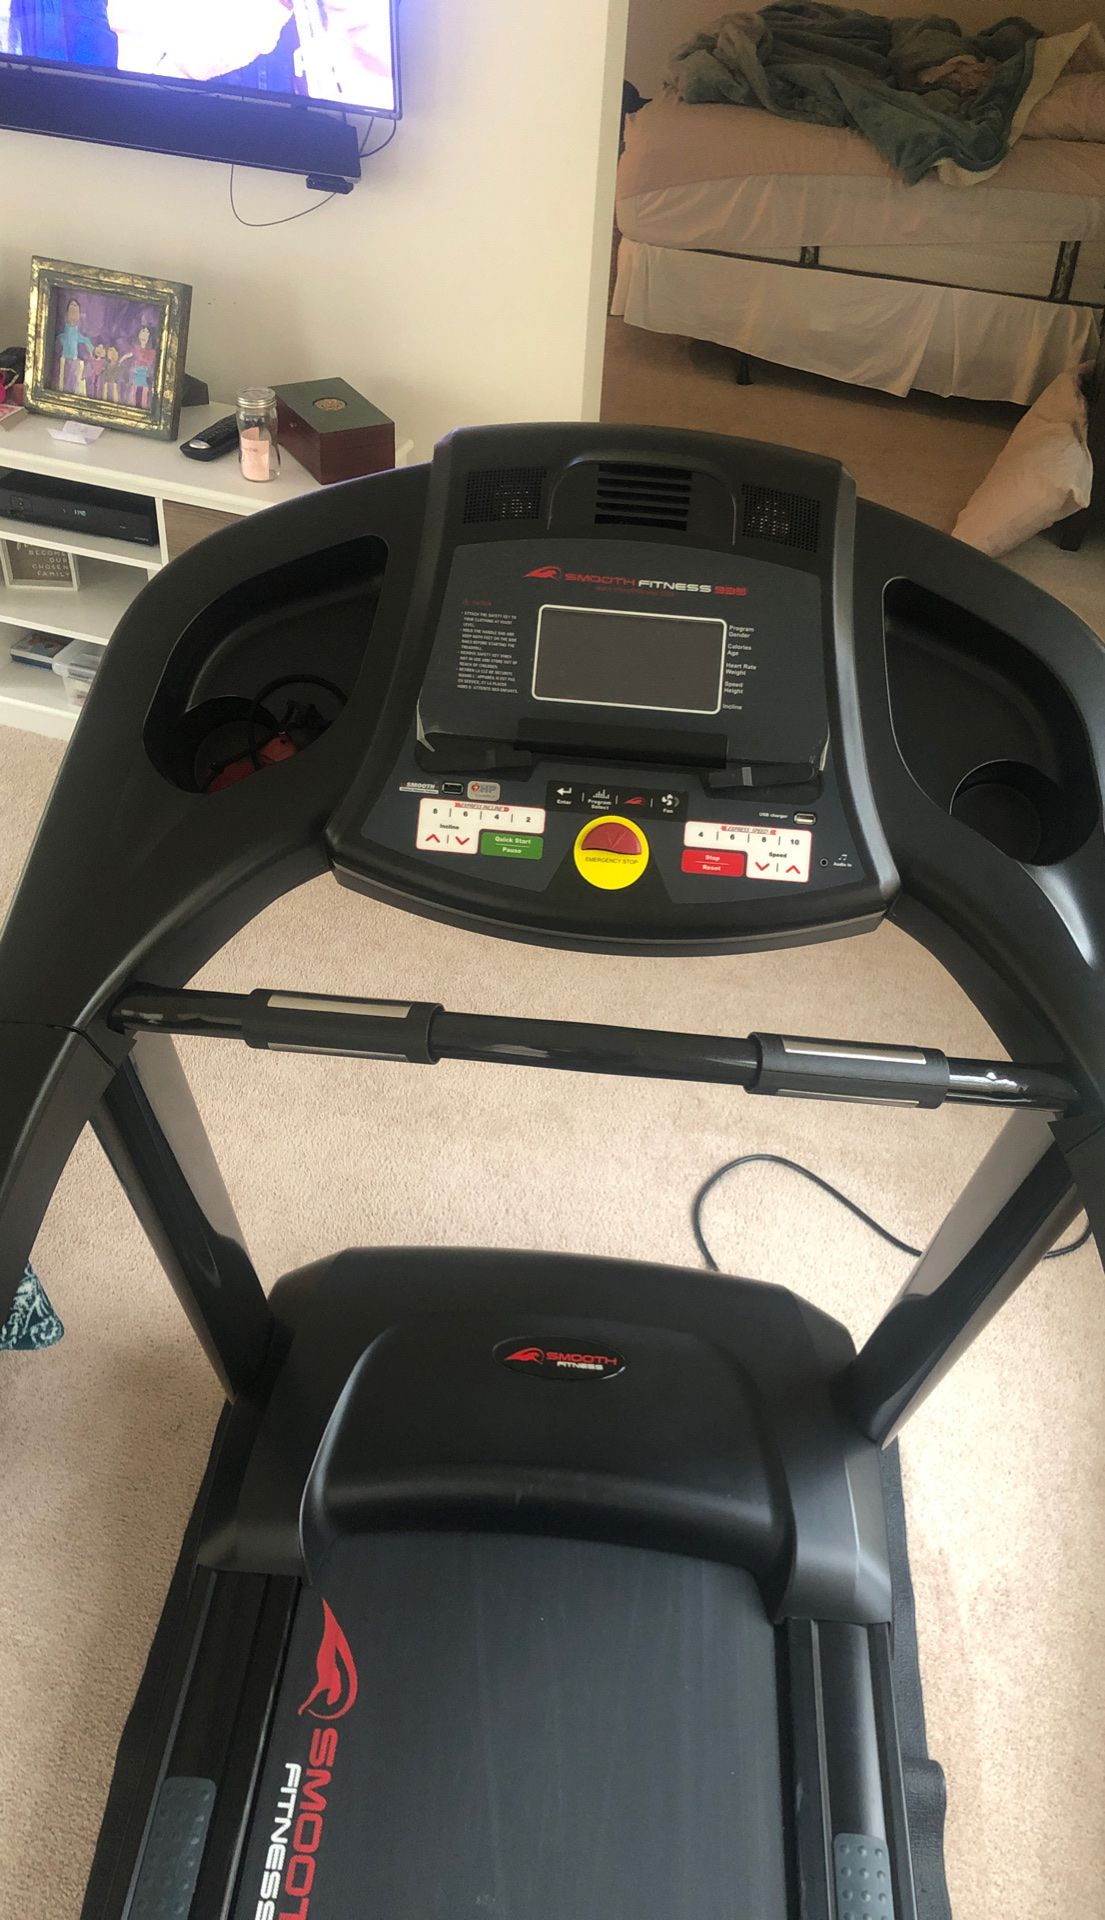 Treadmill: works perfect!